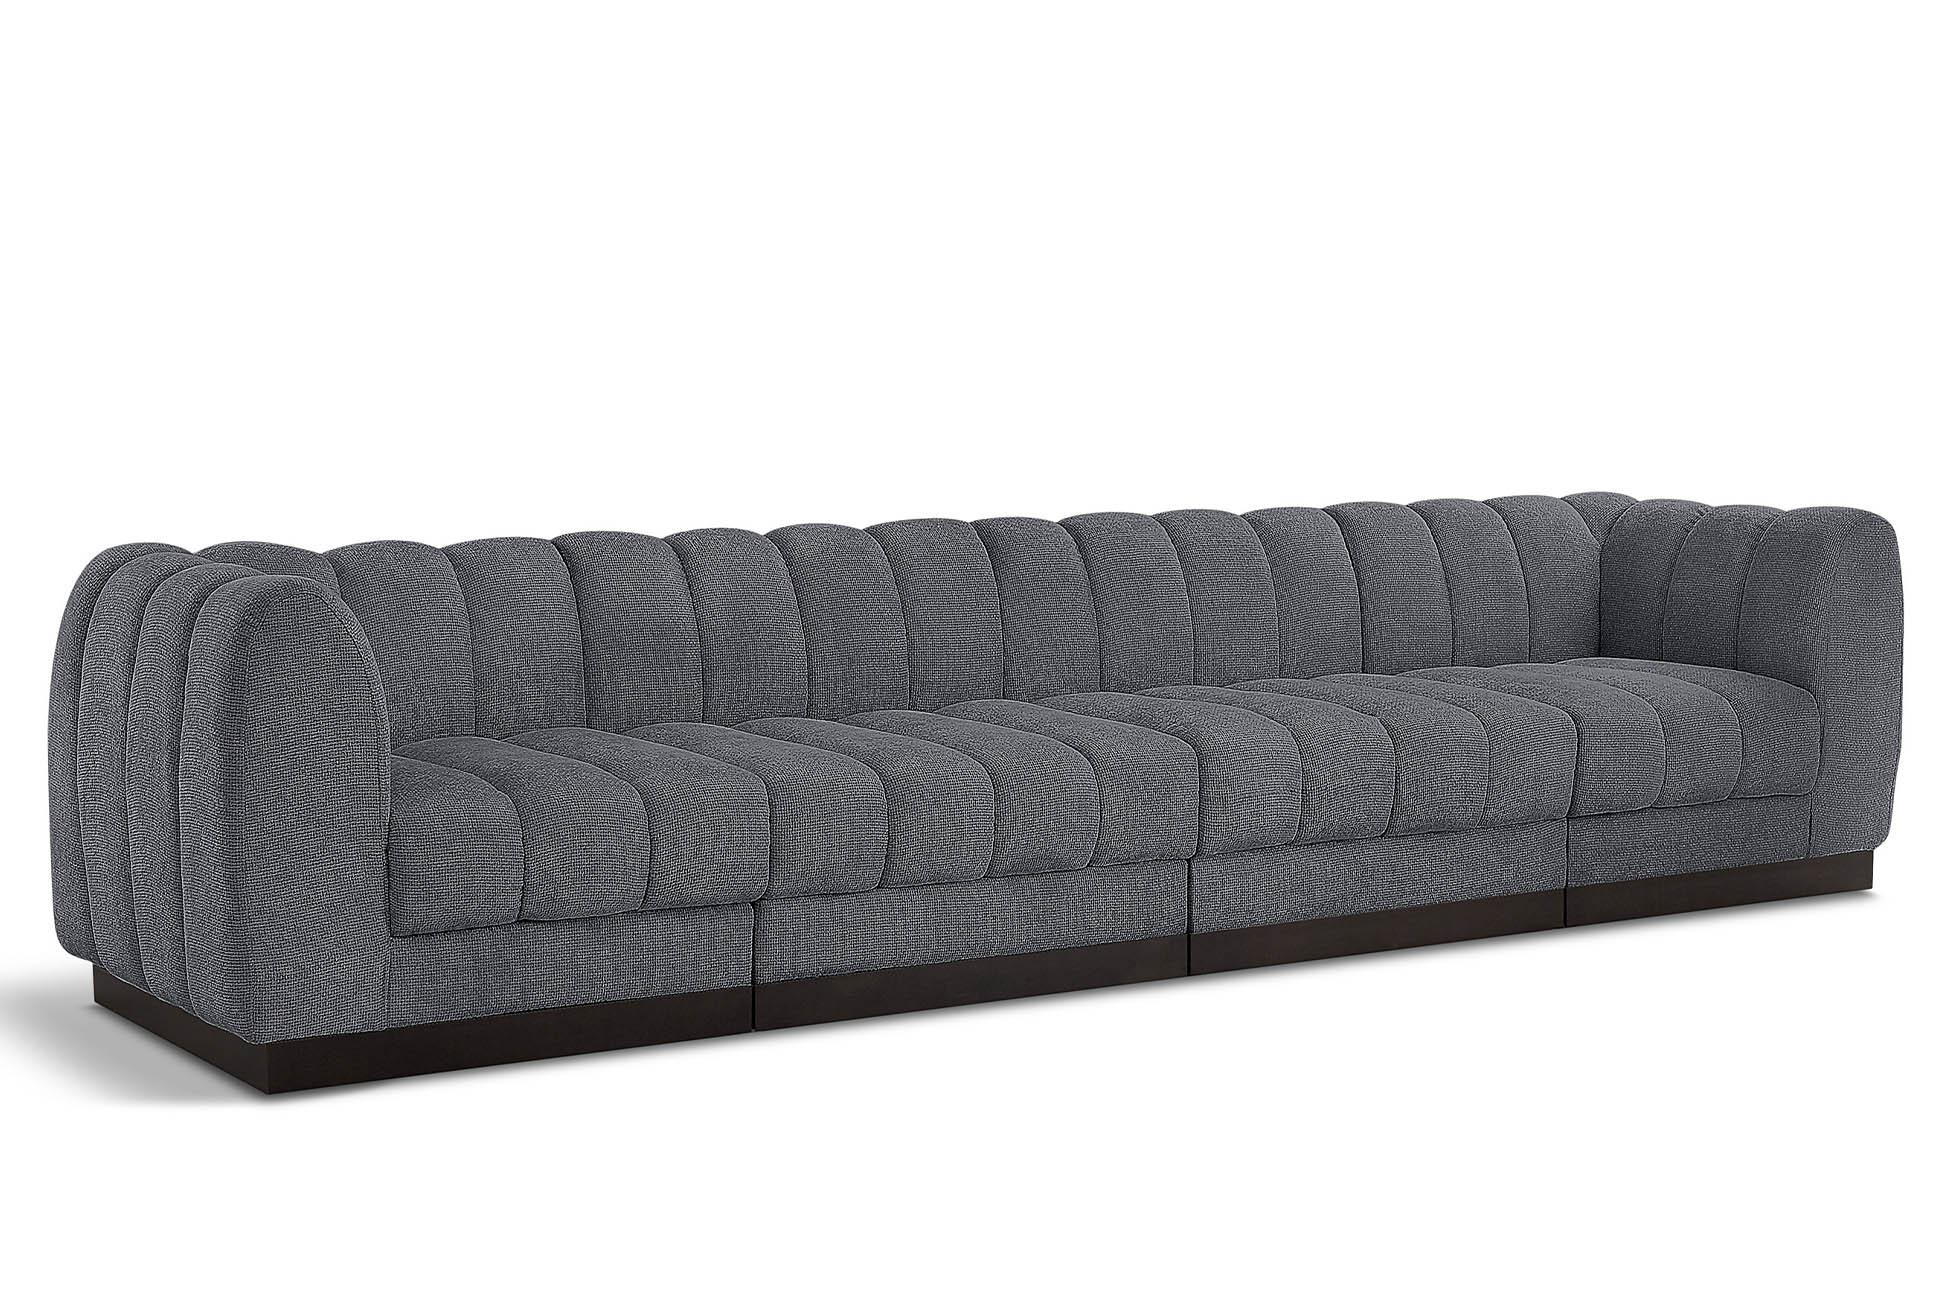 Contemporary, Modern Modular Sofa QUINN 124Grey-S133 124Grey-S133 in Gray Chenille